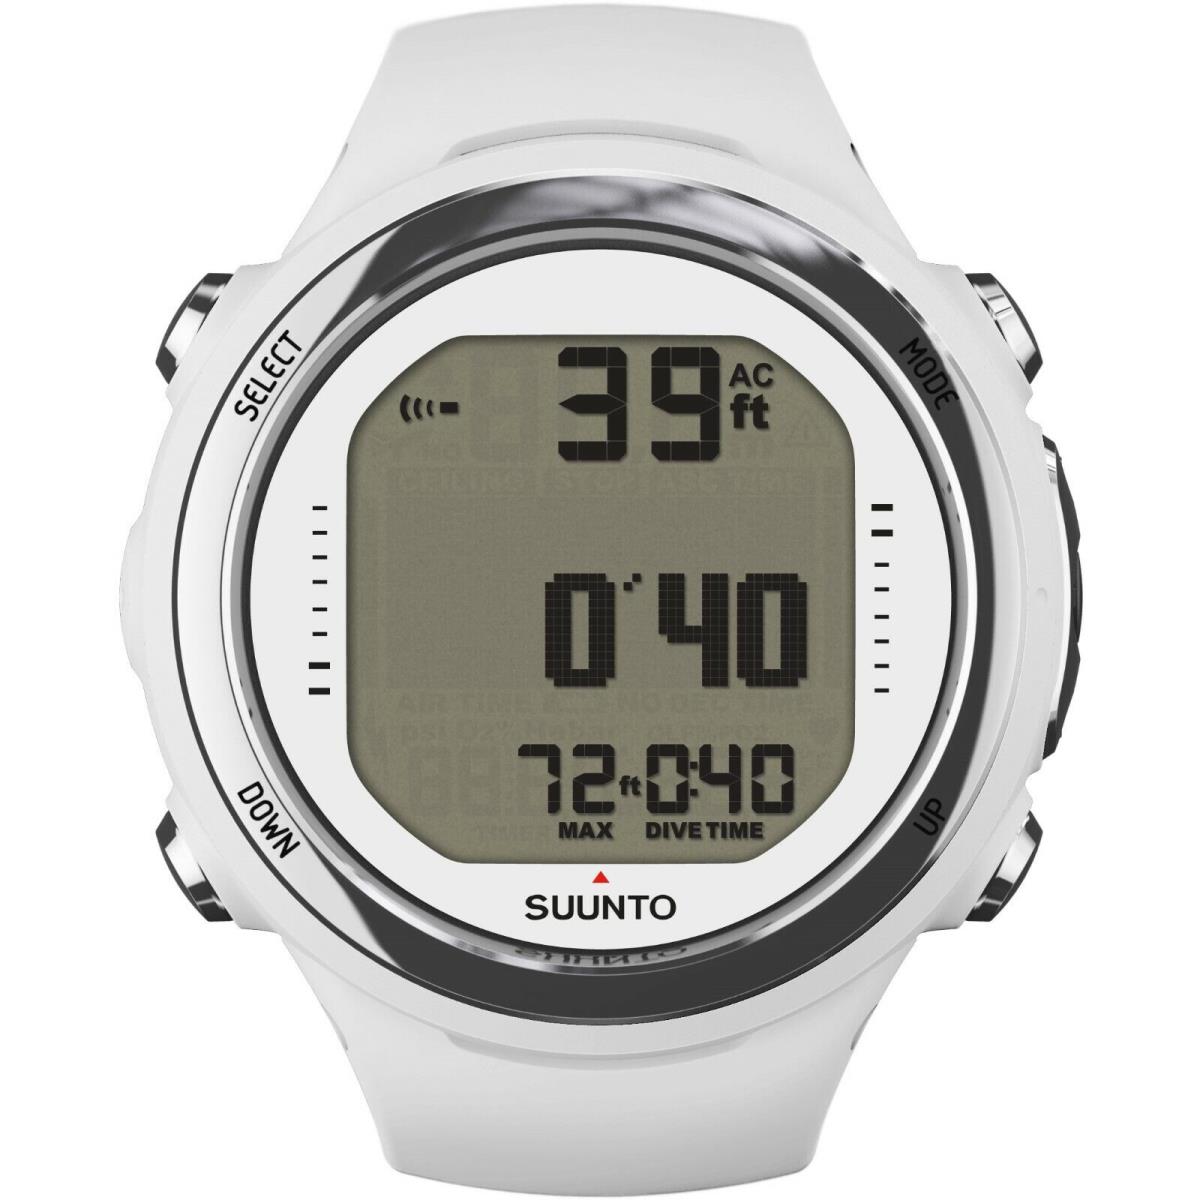 Suunto D4i Novo Hoseless Wrist/watch Computer W/option to Add Transmitter